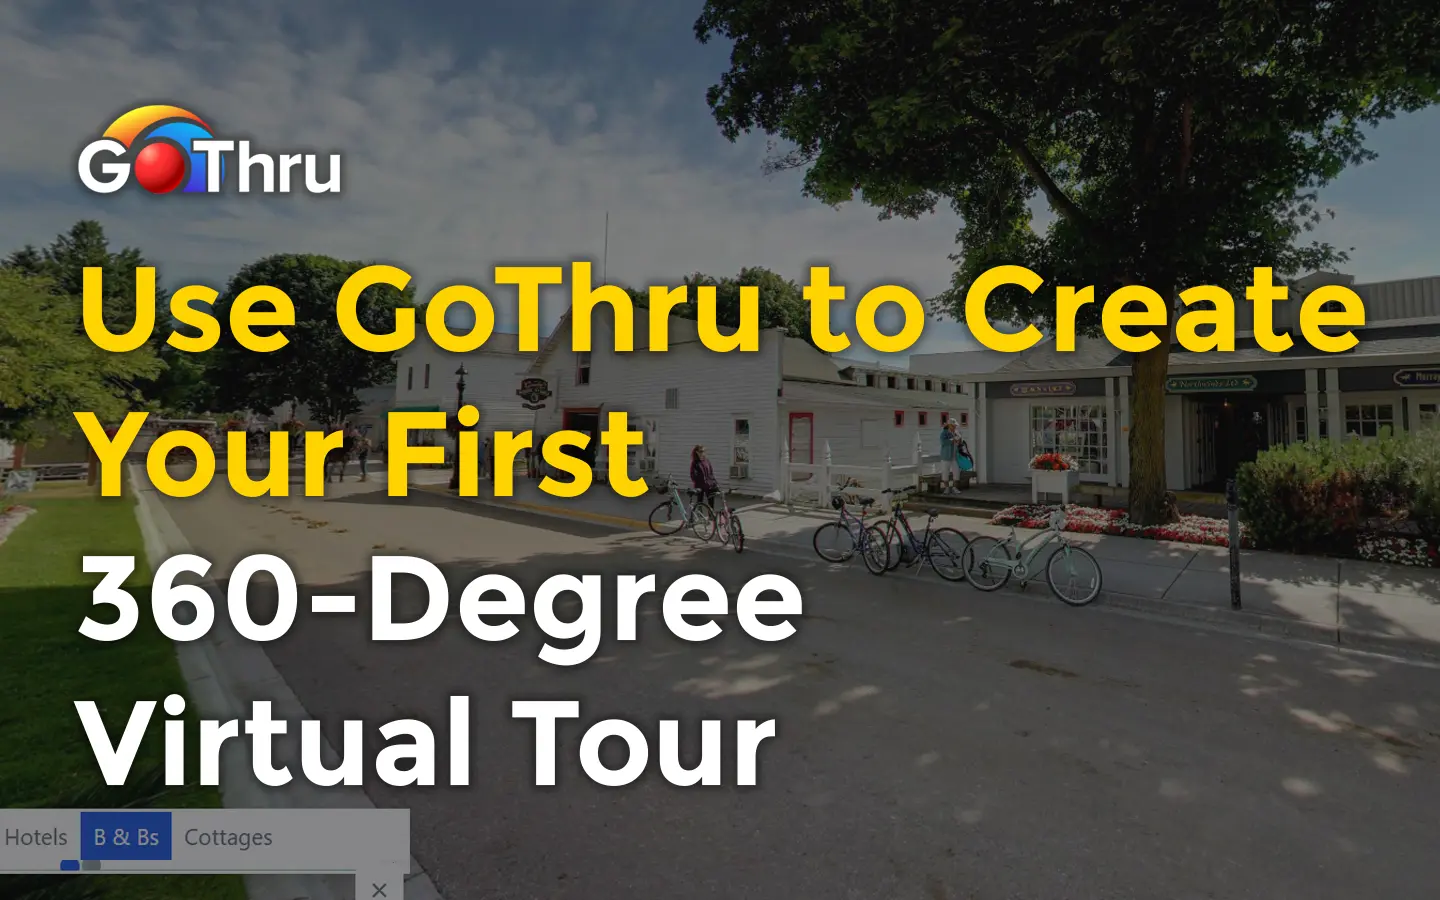 gothru virtual tour